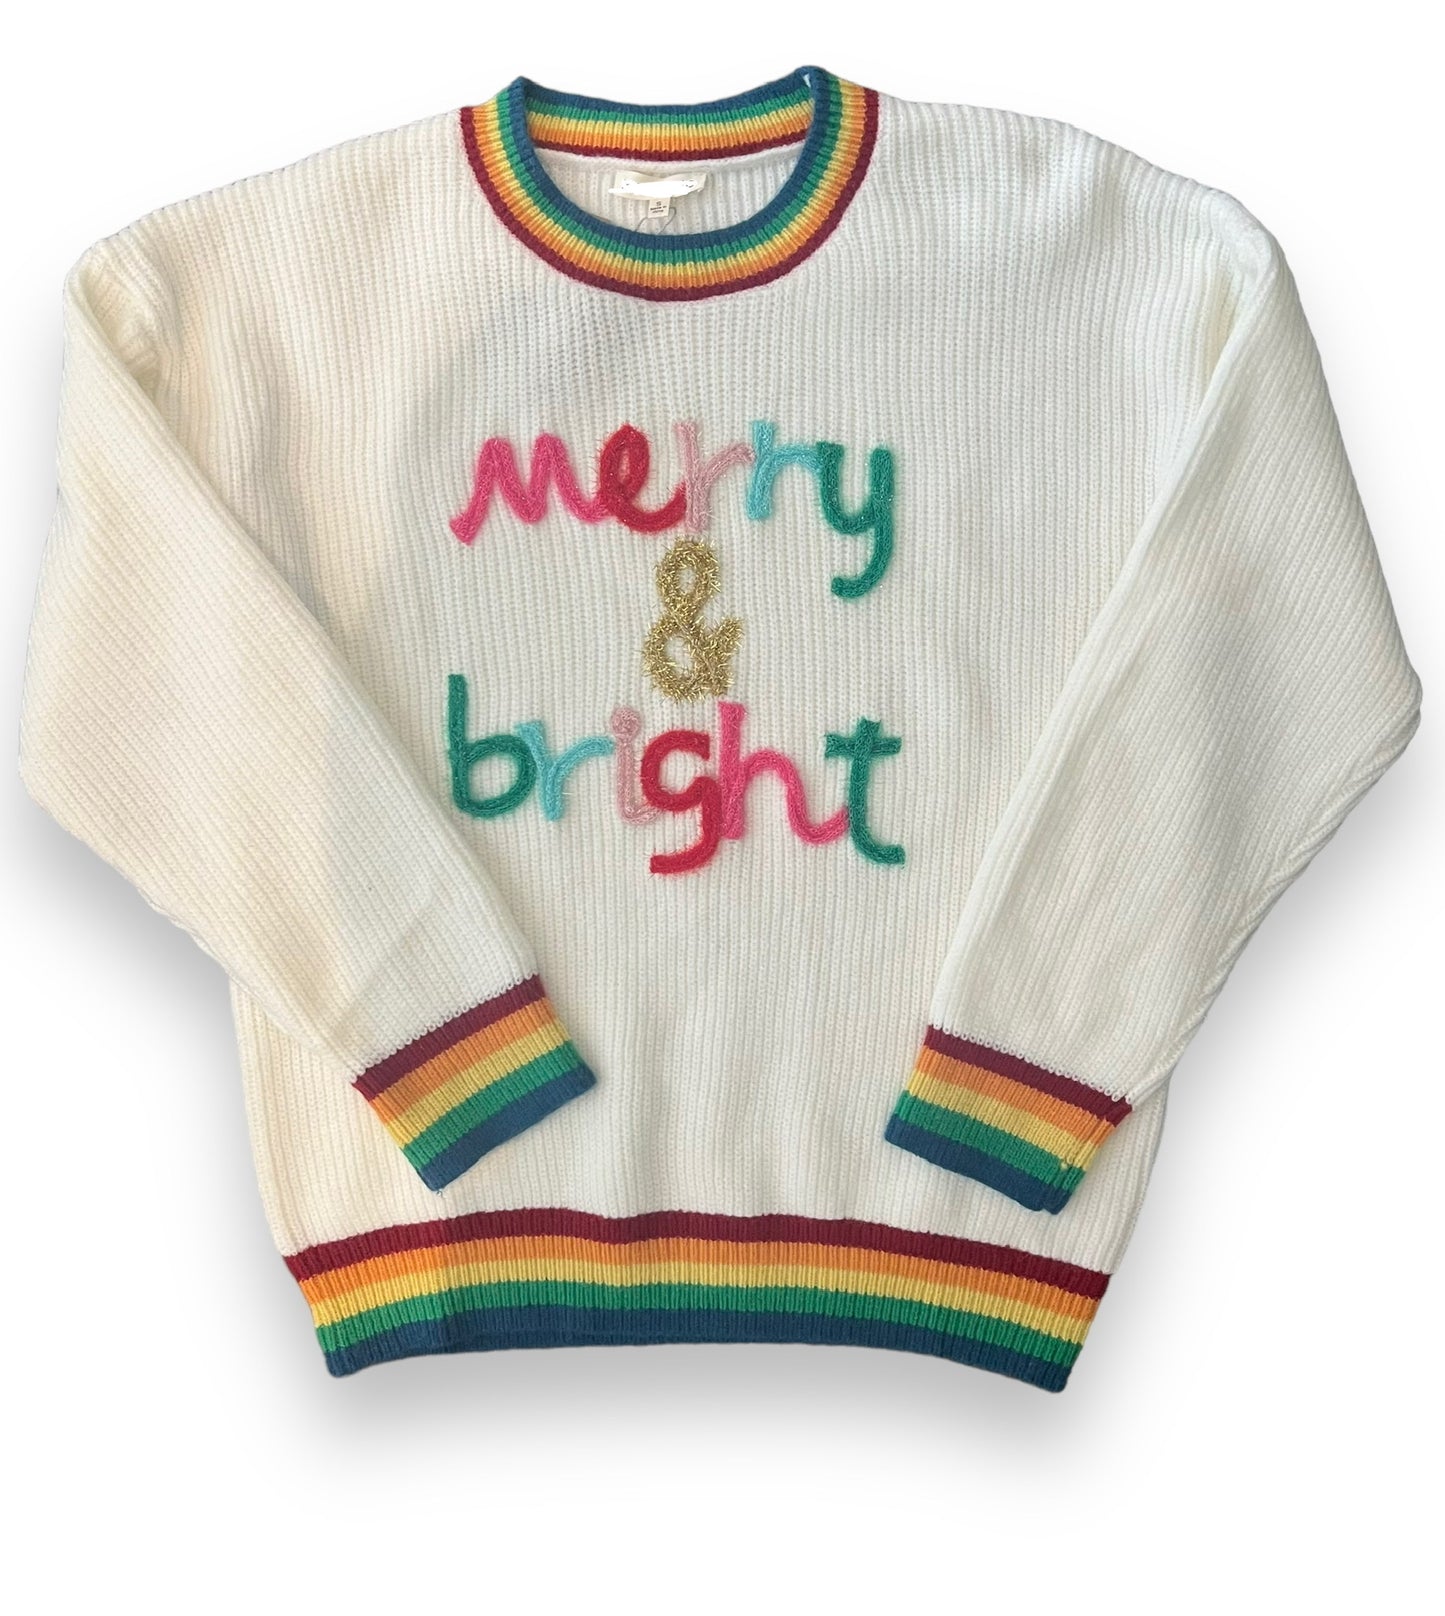 Merry & Bright sweater